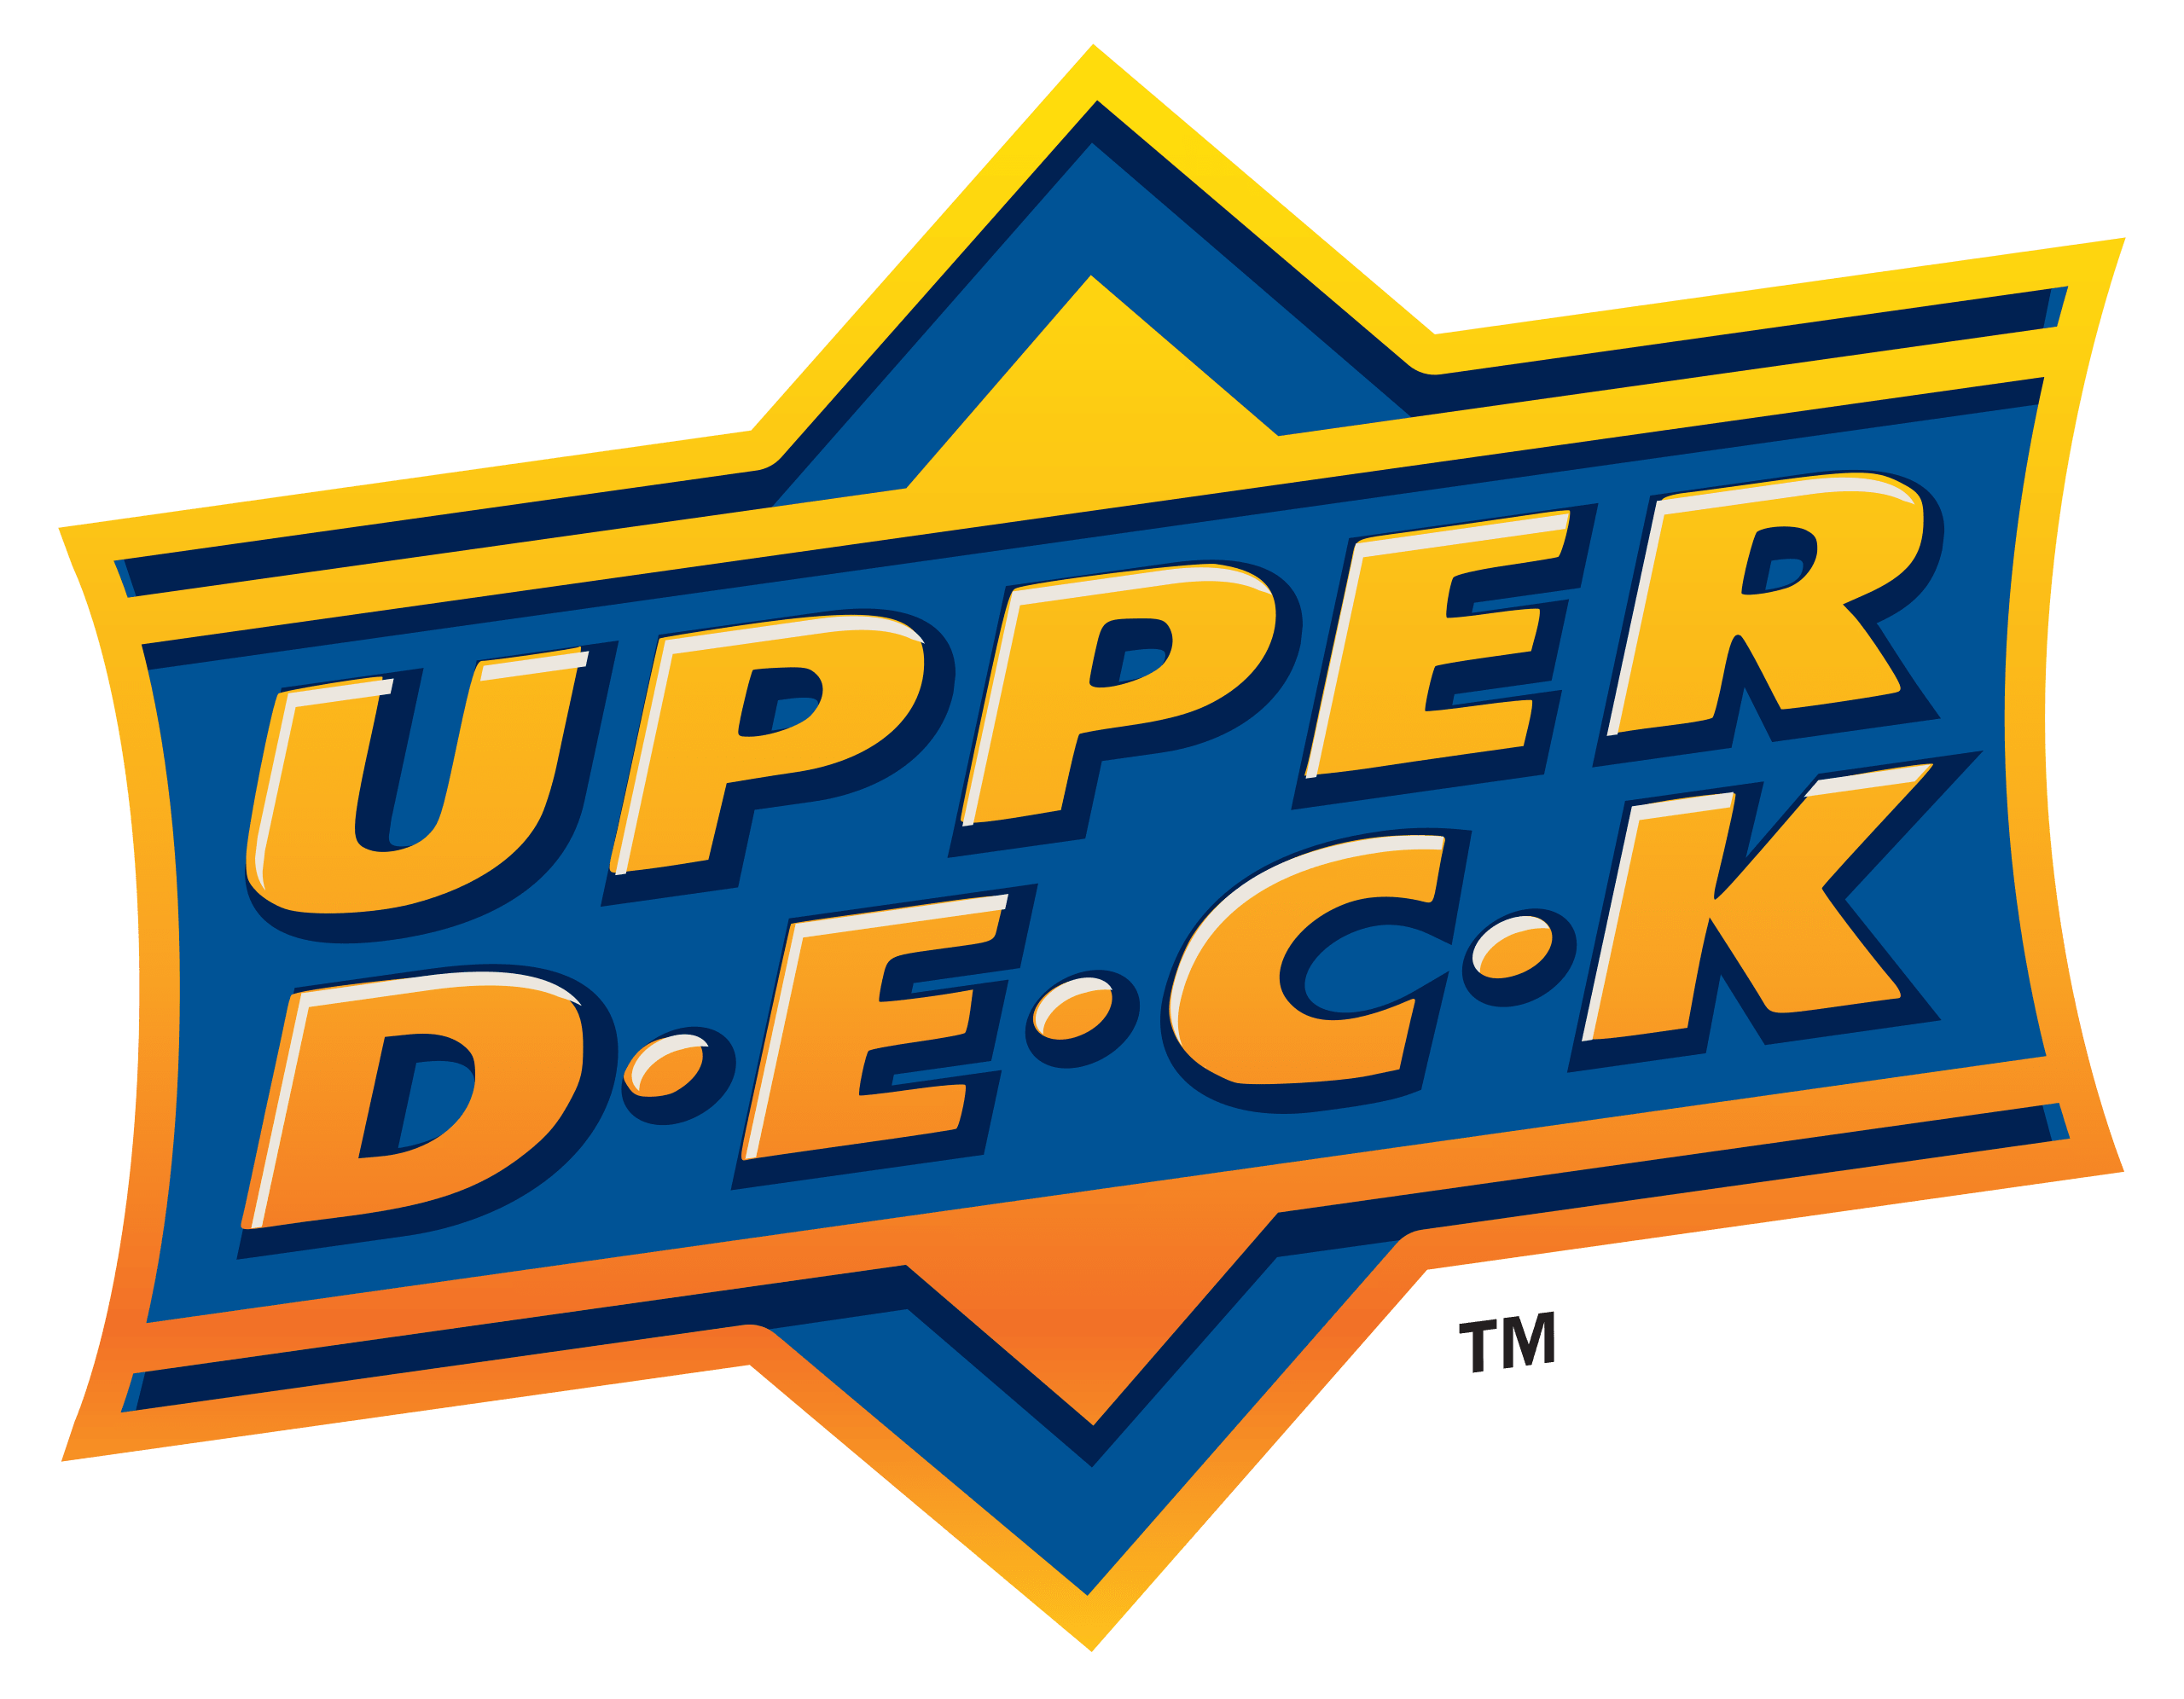 Hockey - 2021/22 - Upper Deck Series 1 - Hobby Box (24 Packs) - Hobby Champion Inc